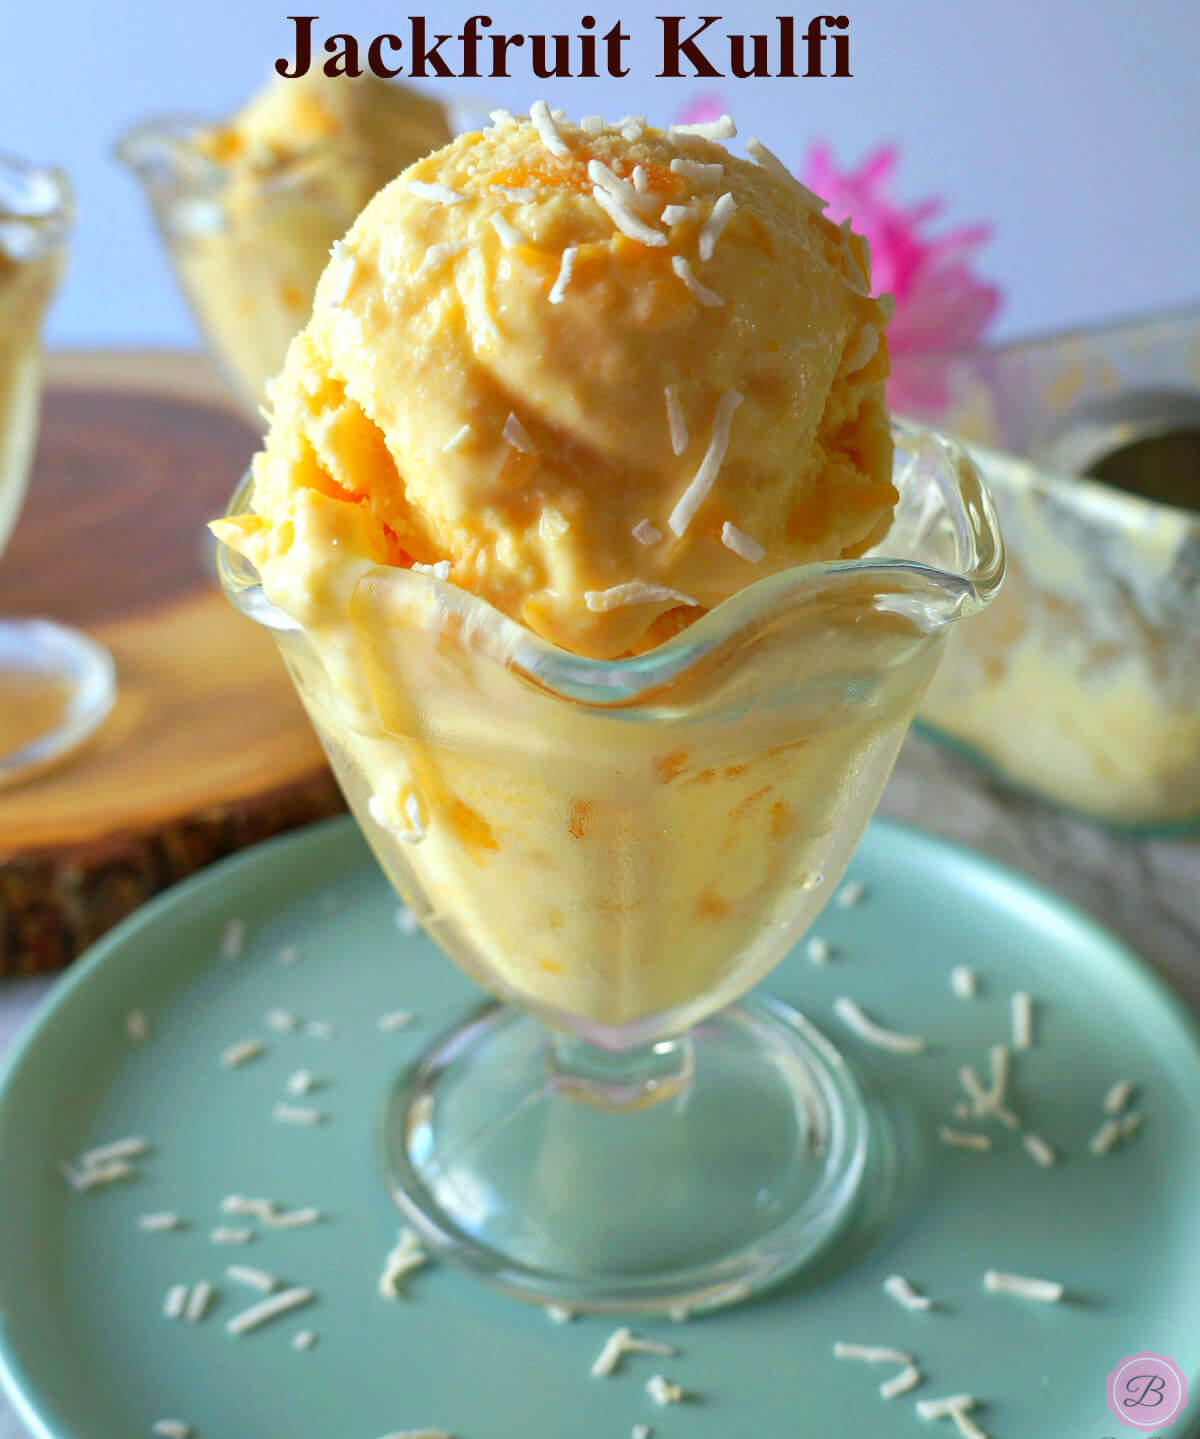 Jackfruit Kulfi (Ice Cream) served in a dessert Glass